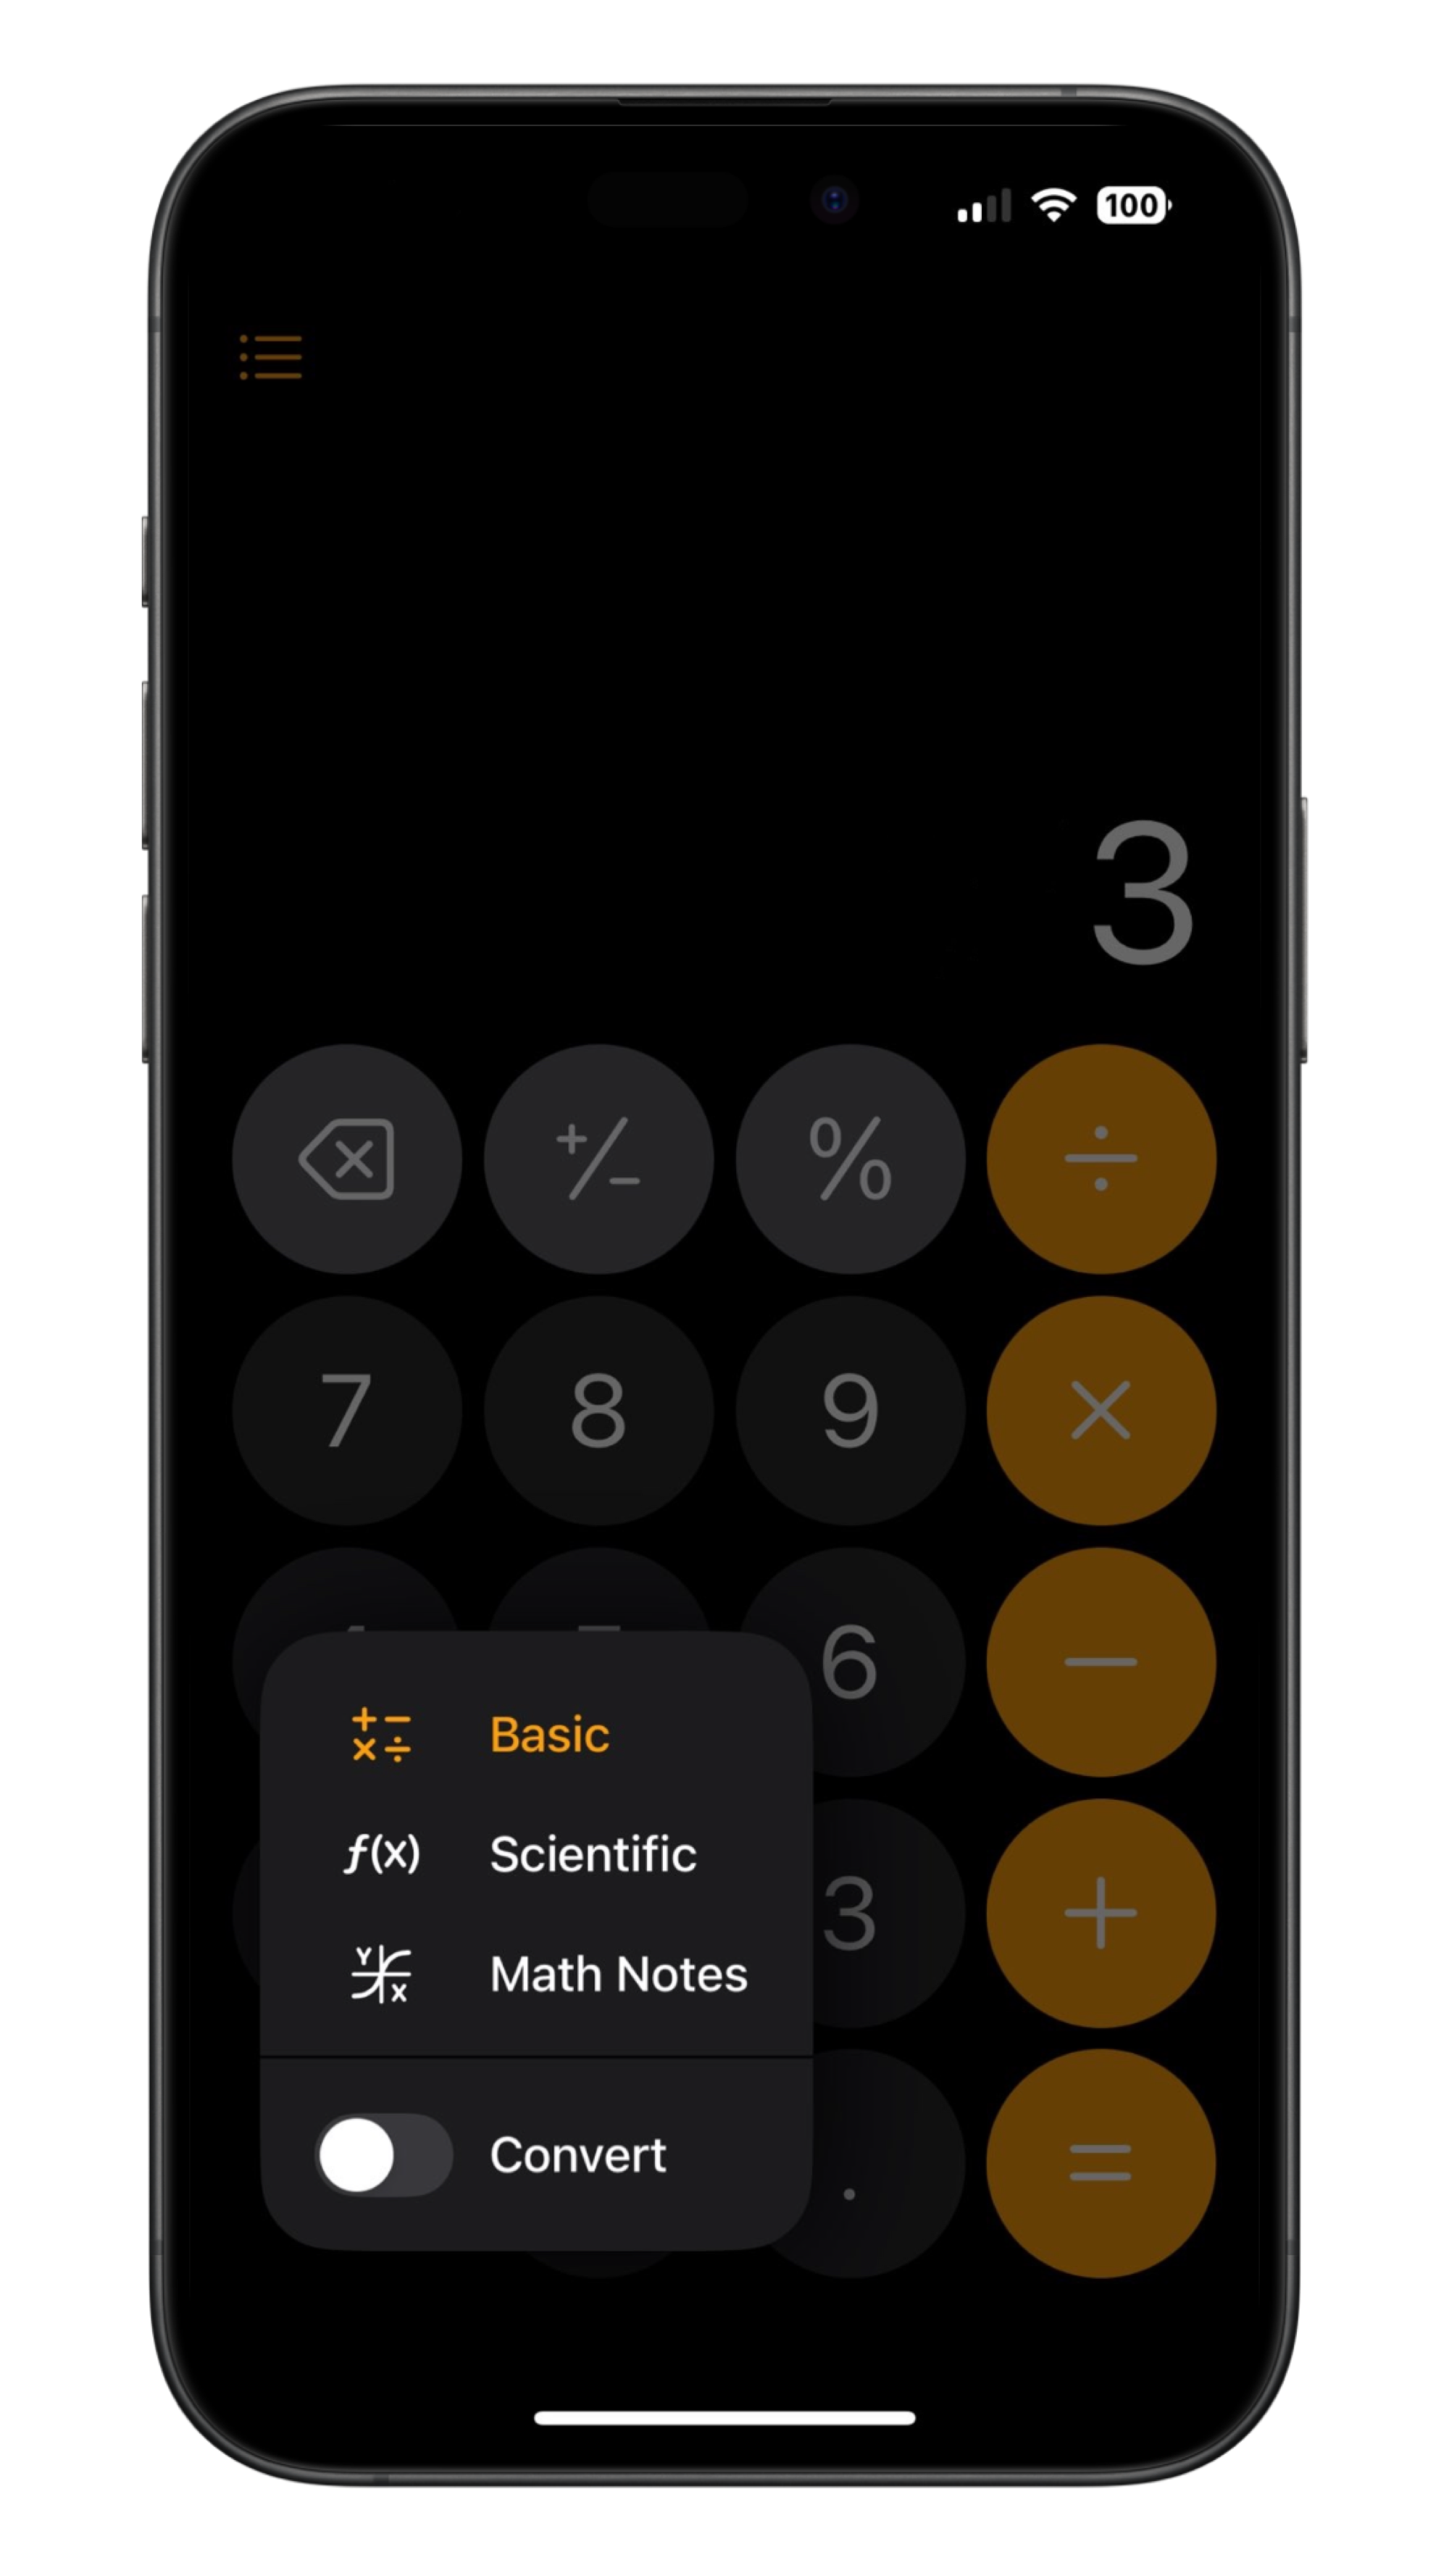 Enhanced Calculator app for iPhone running iOS 18.